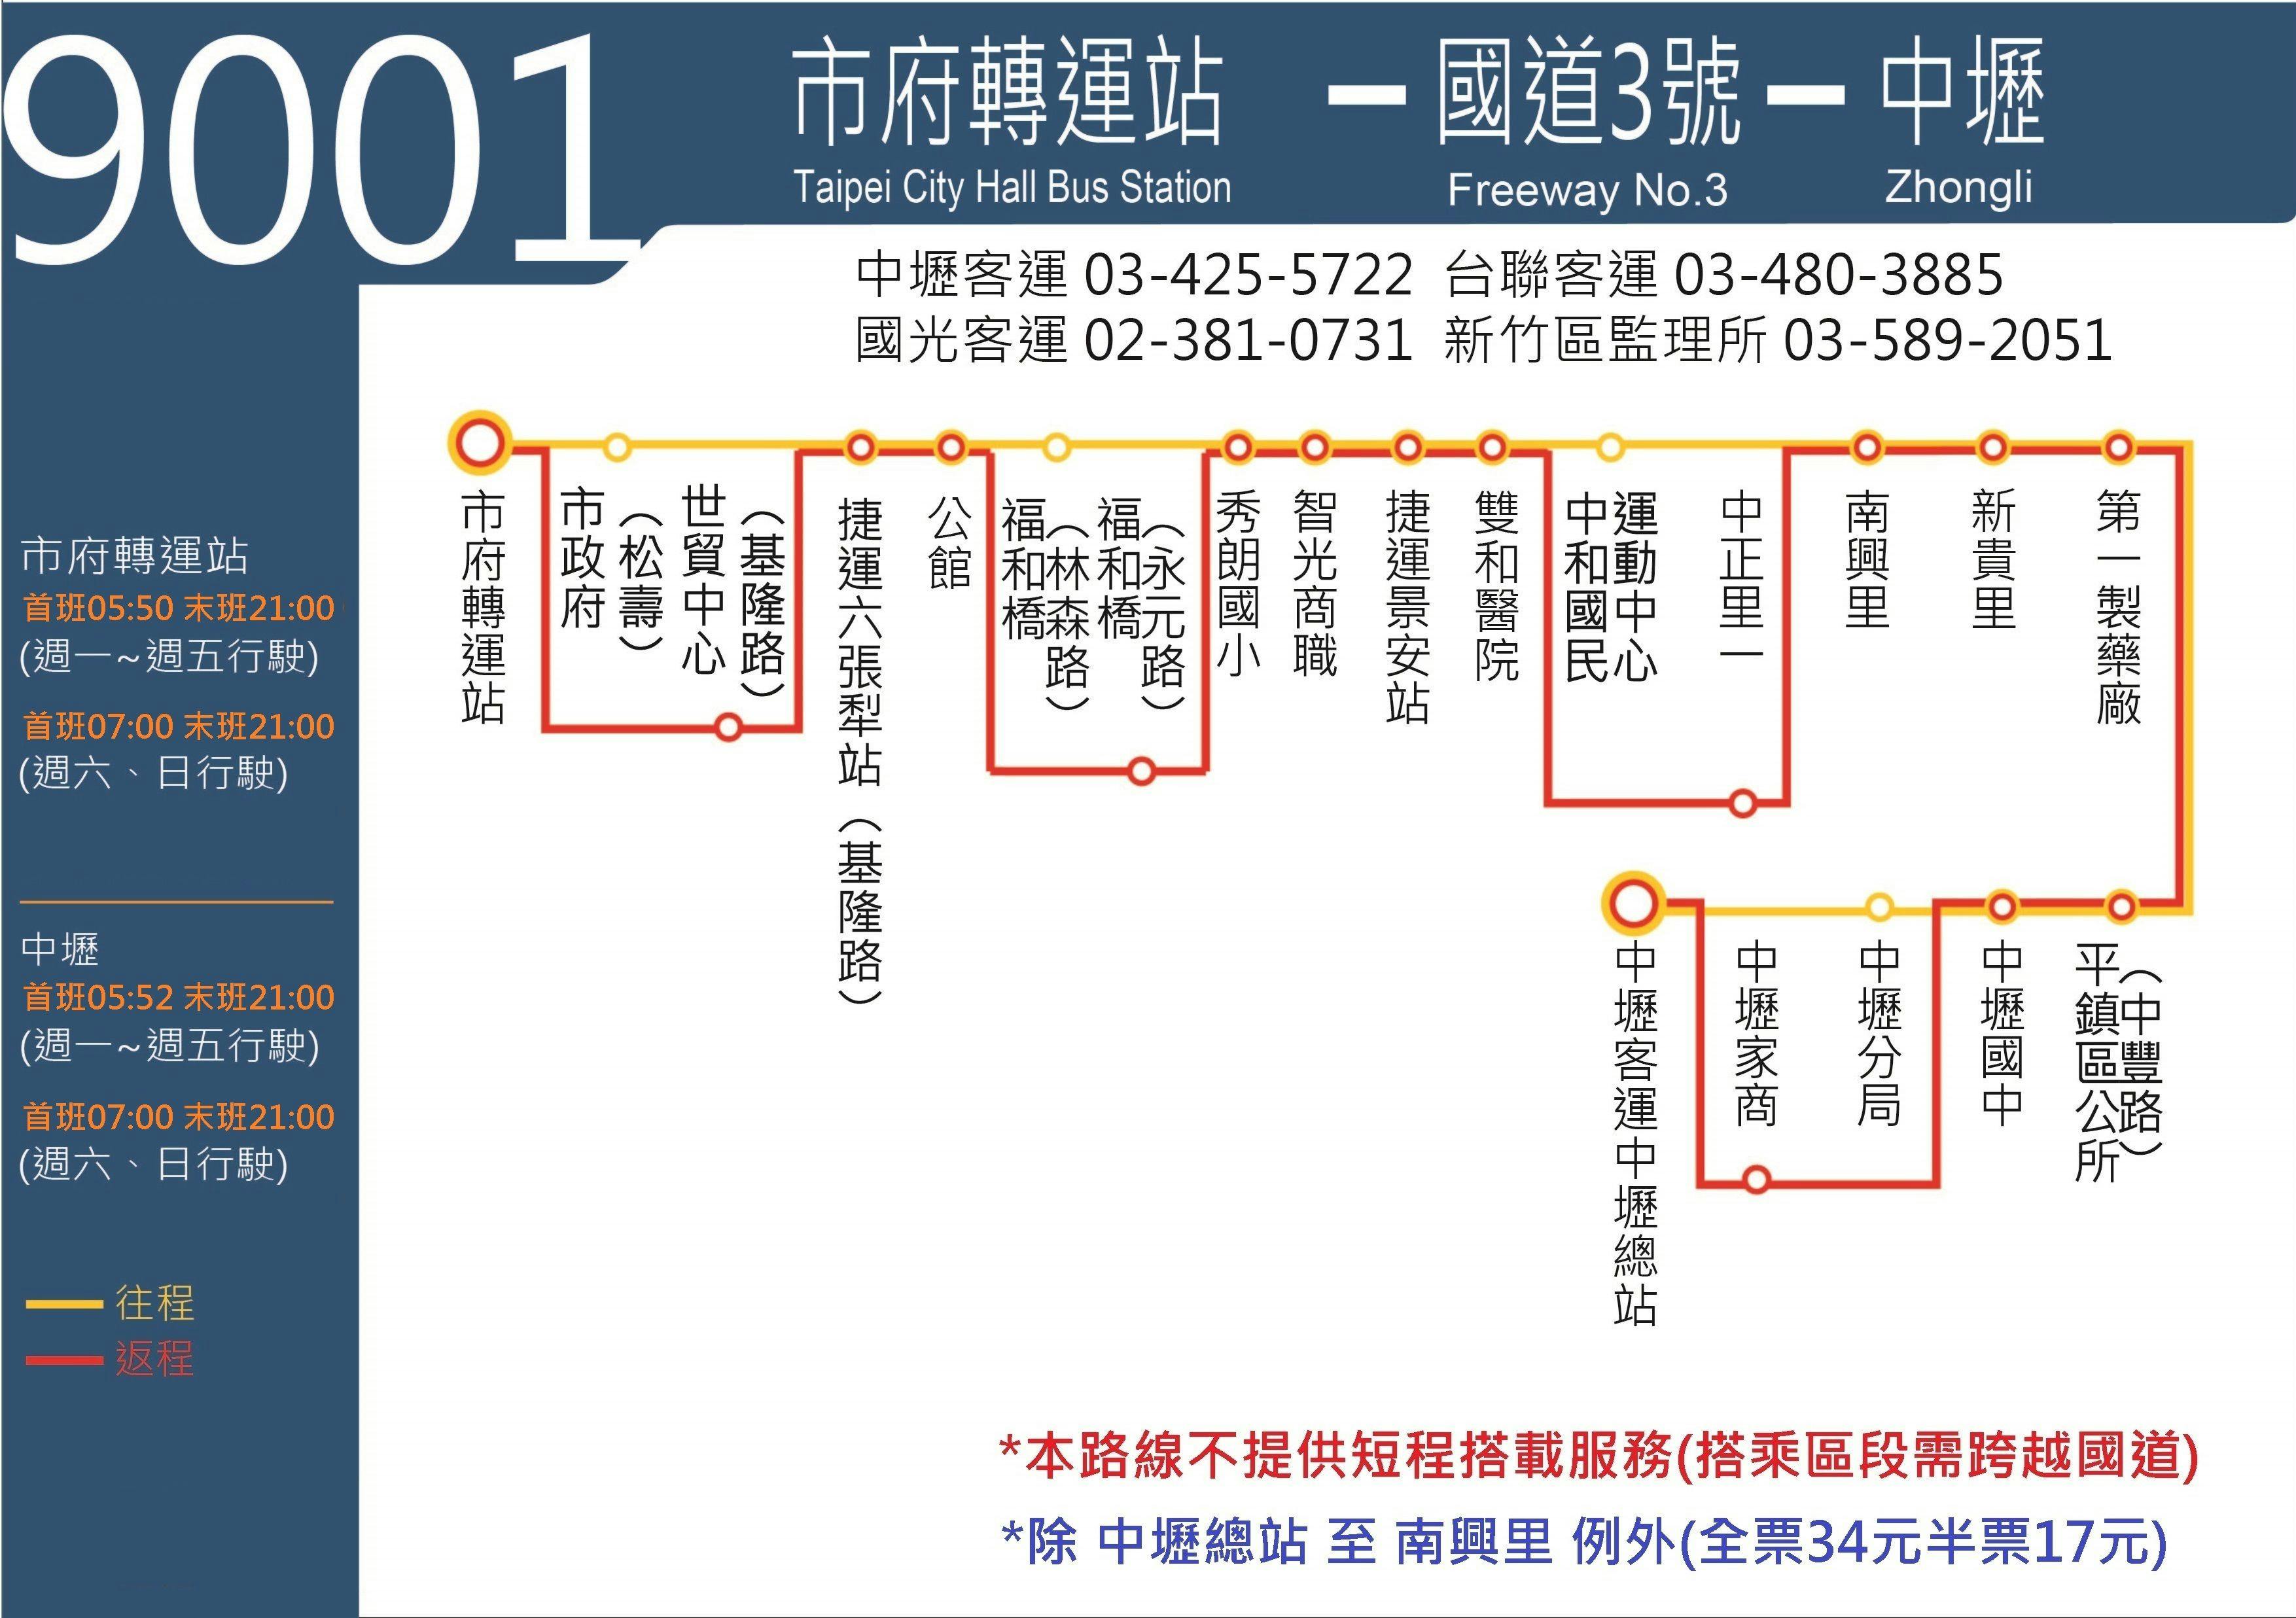 9001Route Map-Chungli Bus